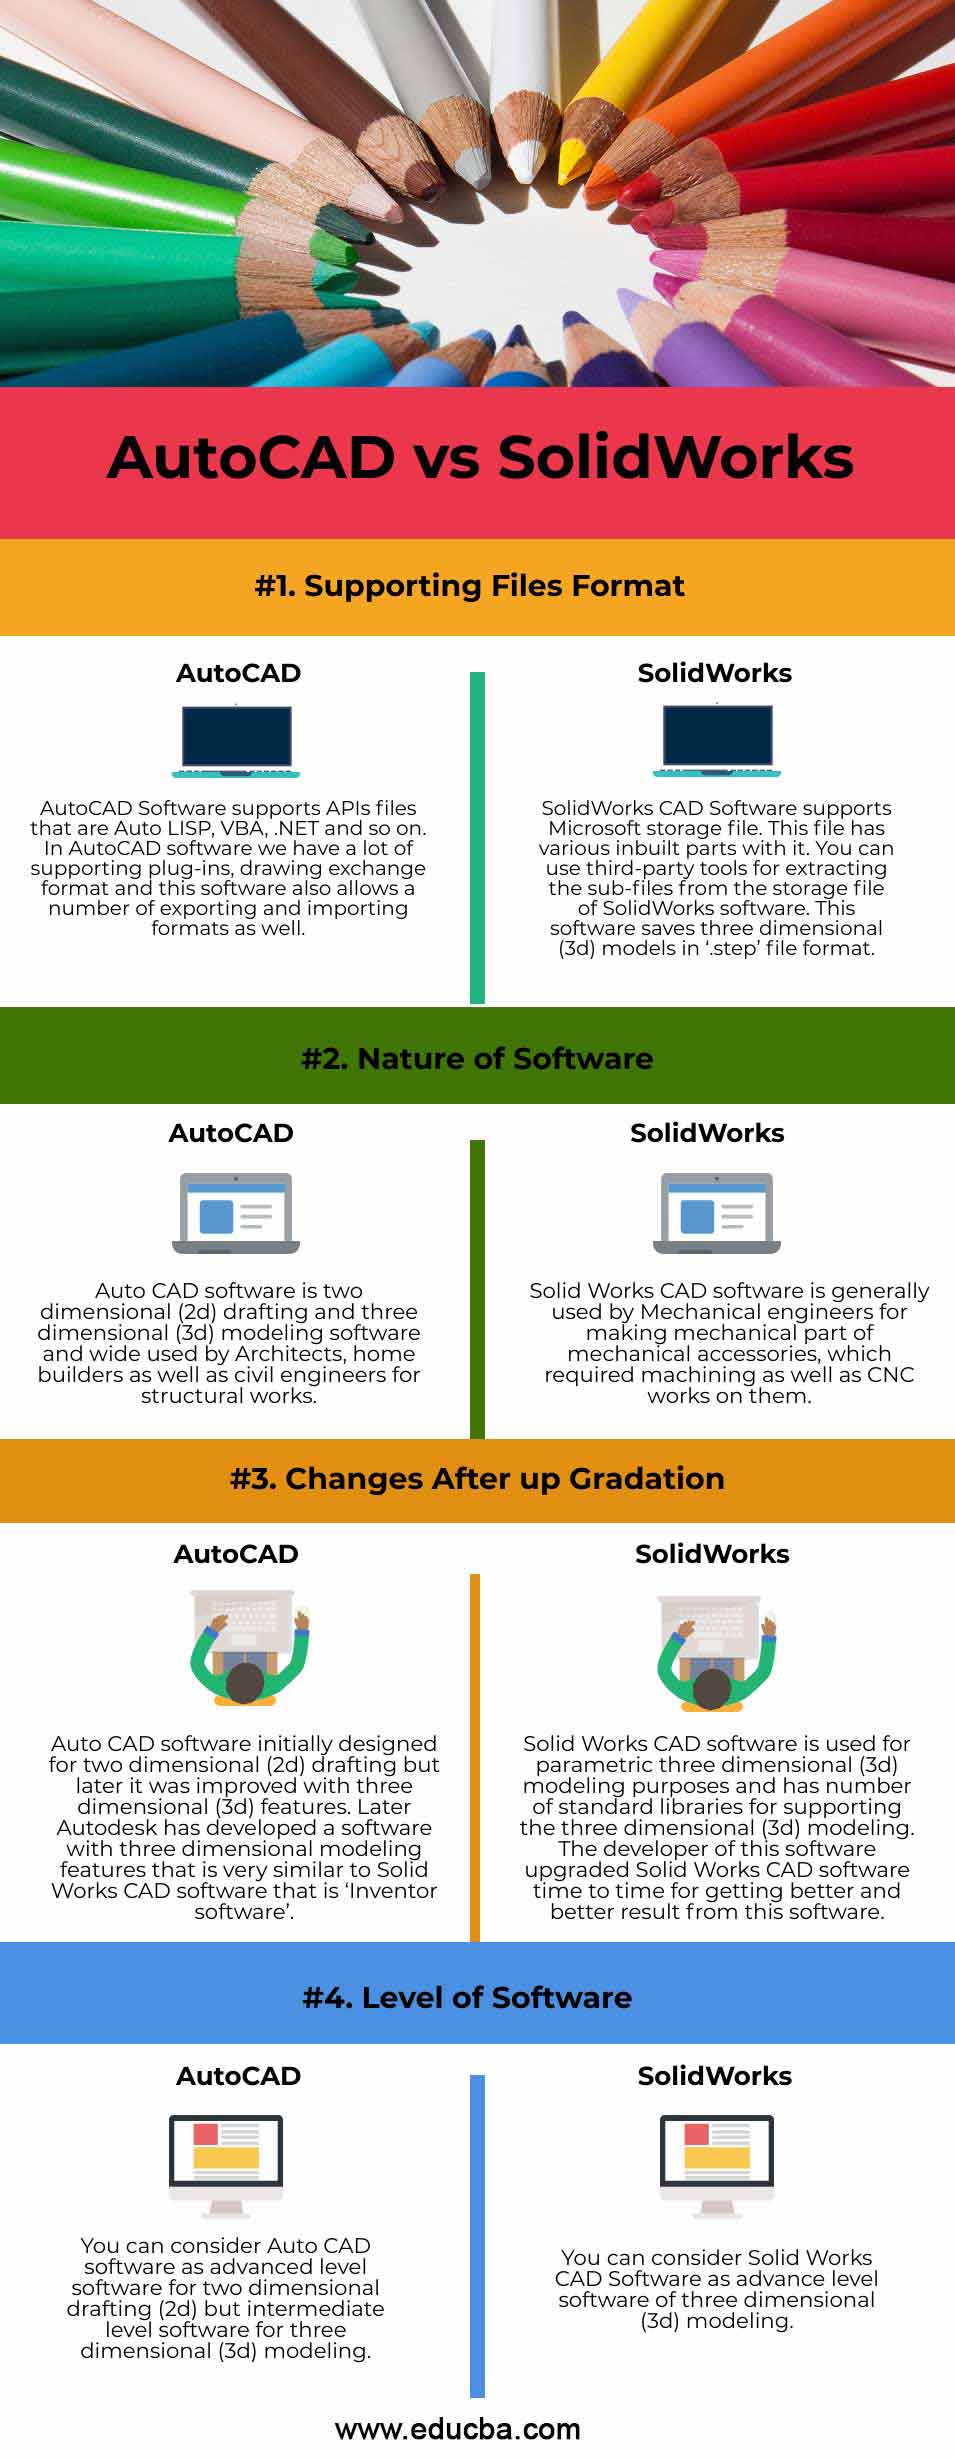 AutoCAD vs SolidWorks info